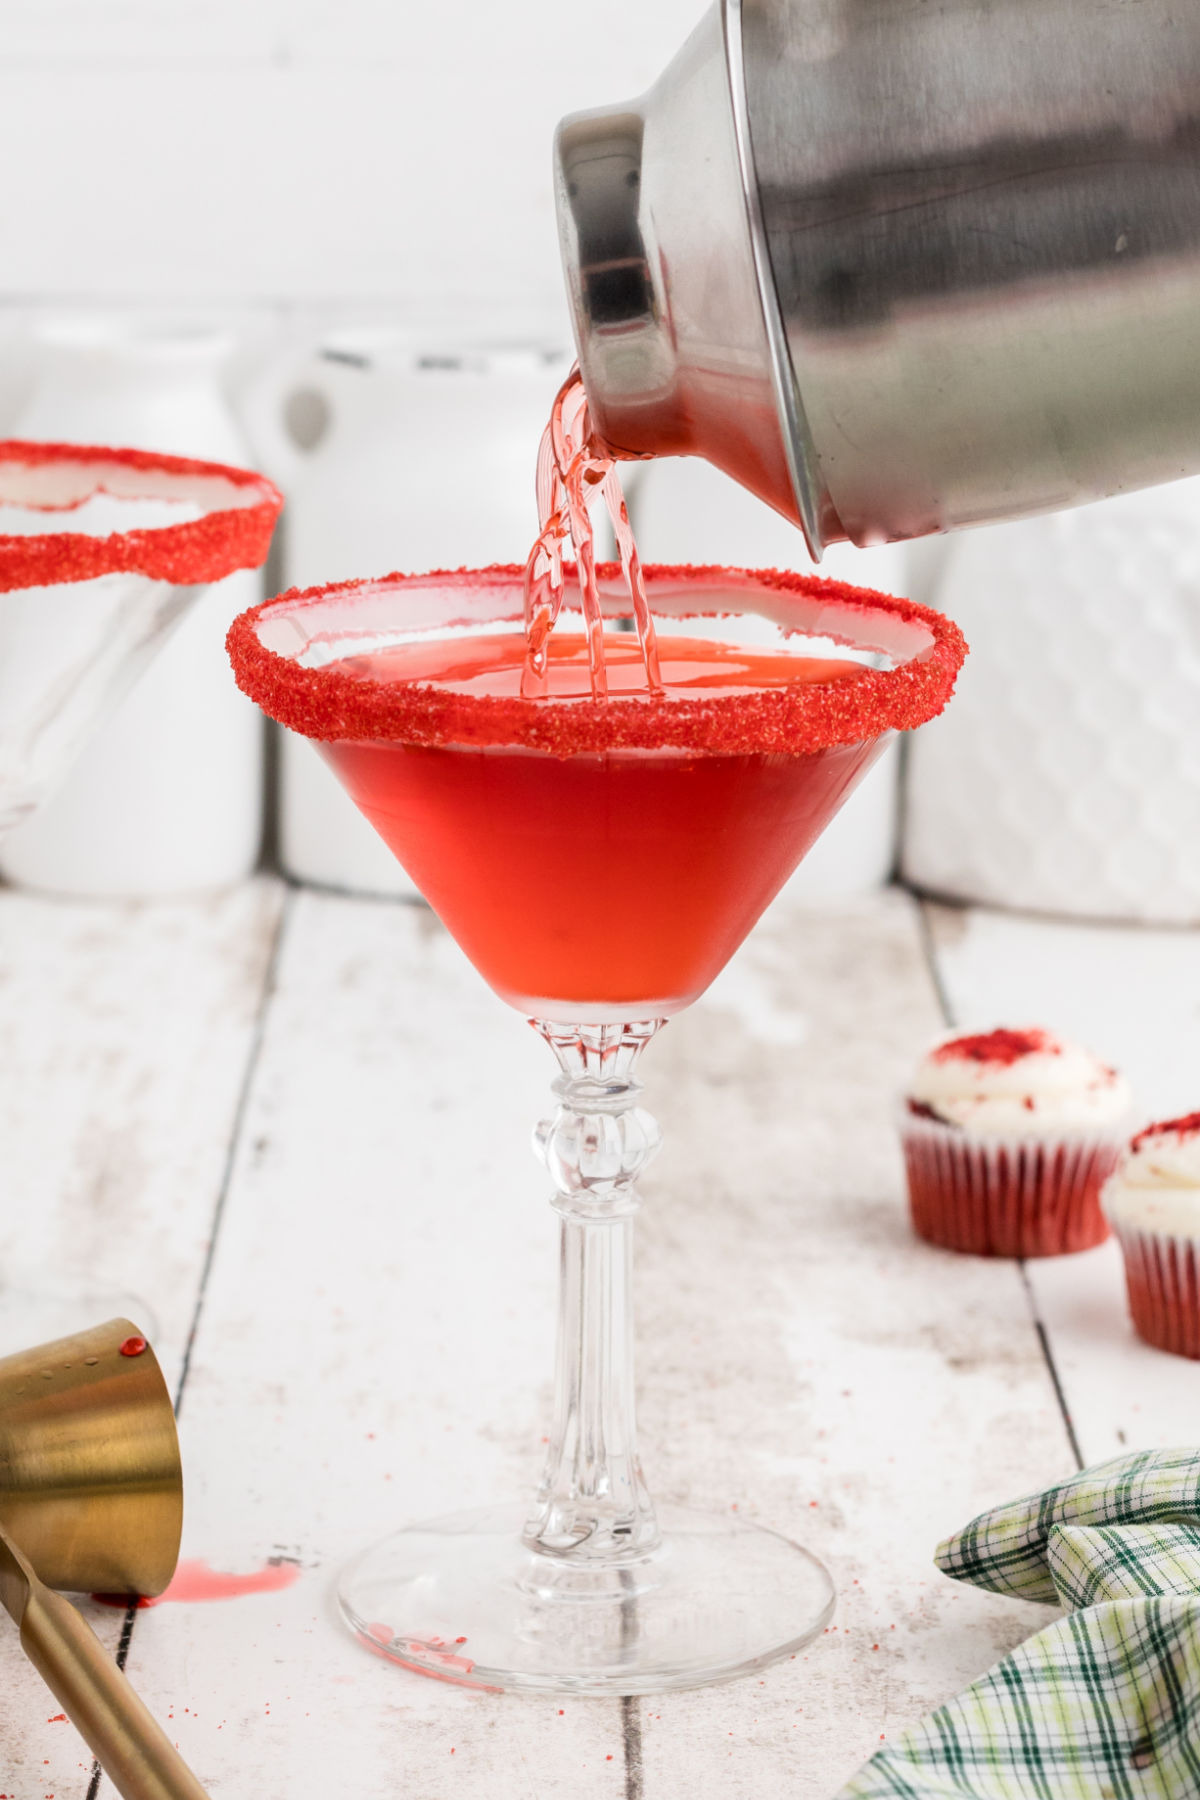 Red velvet martini in a martini glass with a red sugar rim.